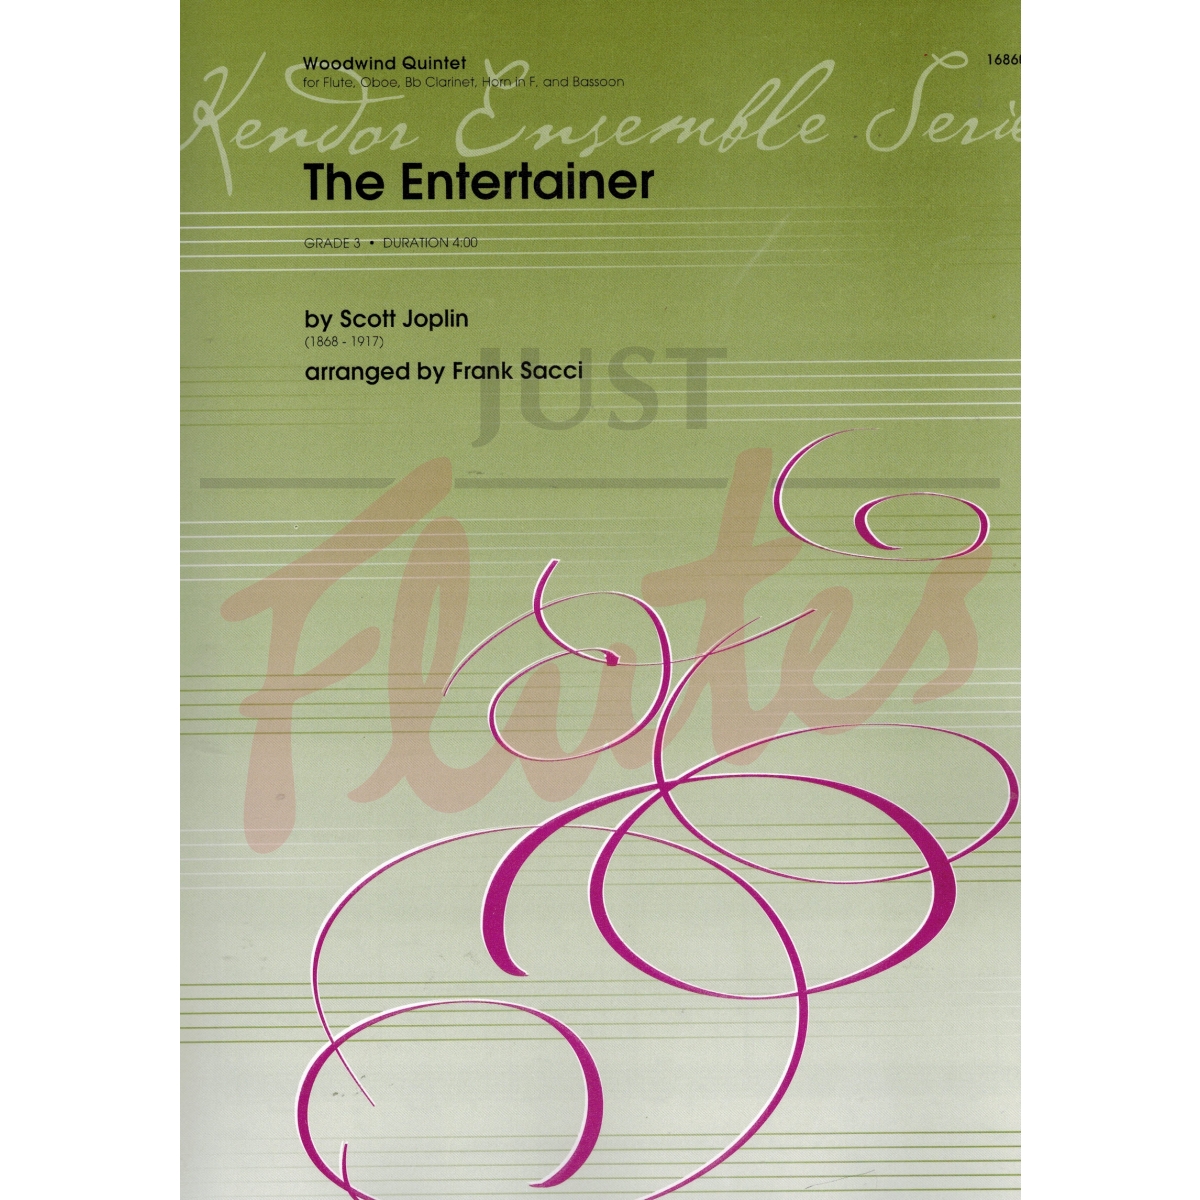 The Entertainer [Wind Quintet]